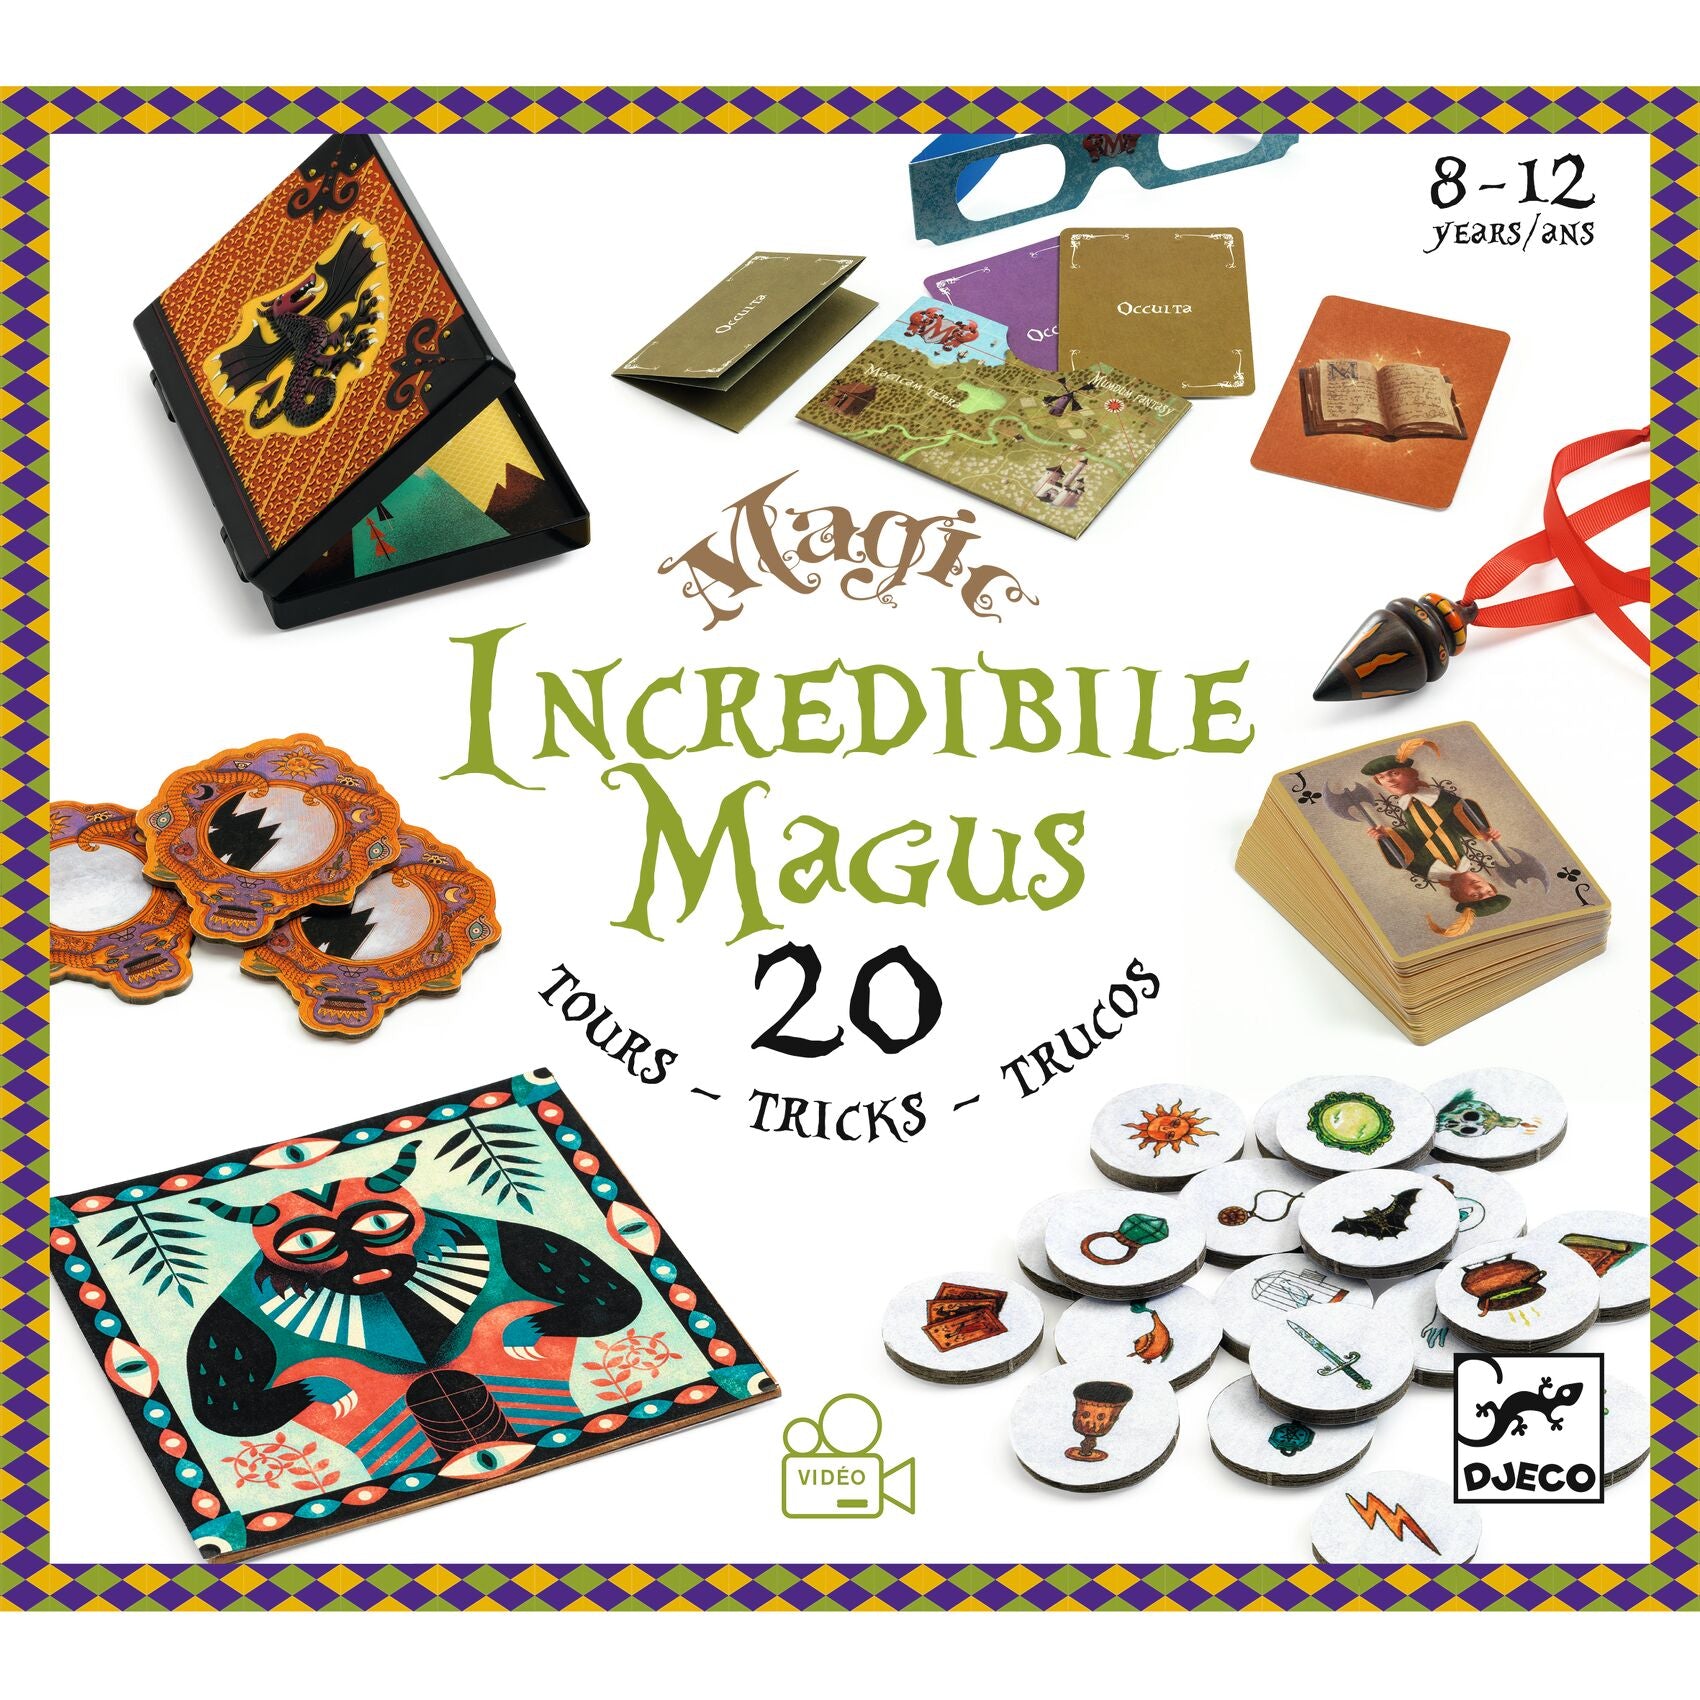 Djeco | Magic Box - Incredible 20 Tricks